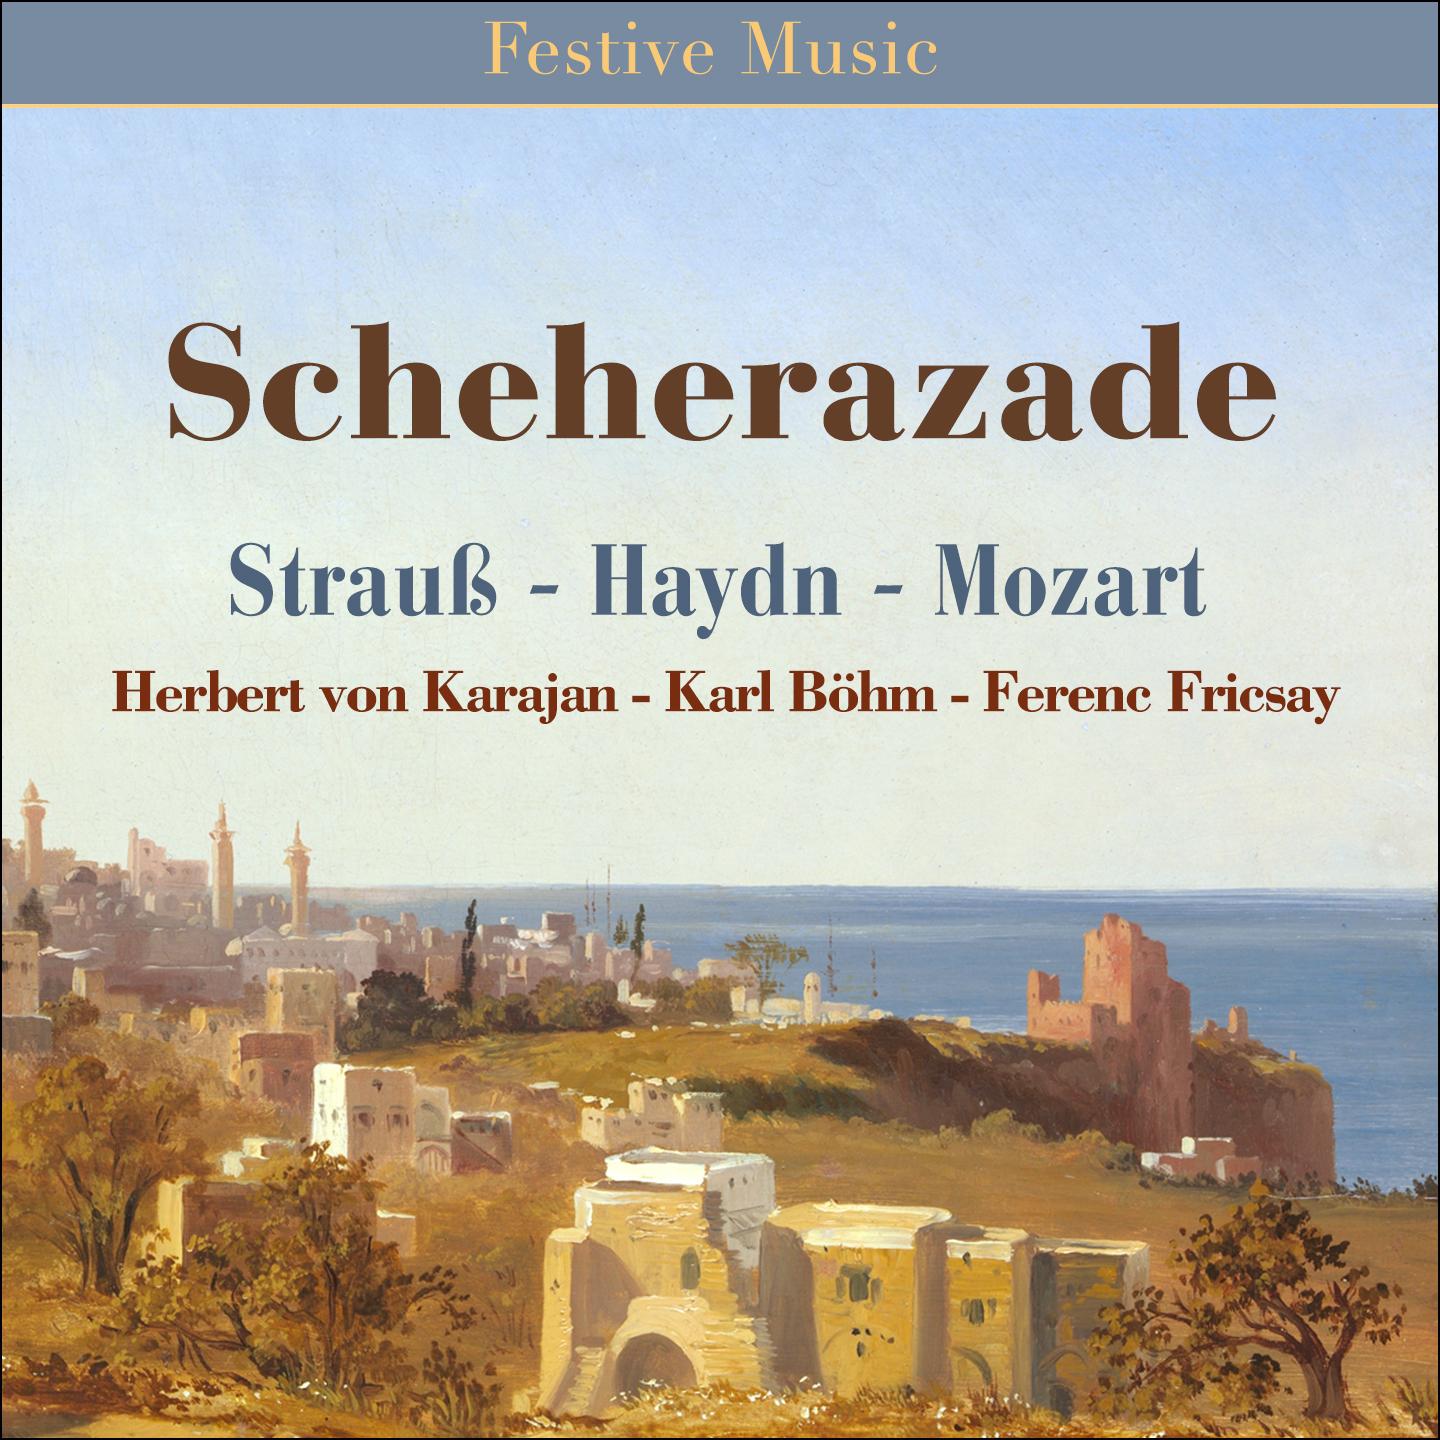 Scheherazade, Op. 35: II. The Legend of the Kalendar Prince